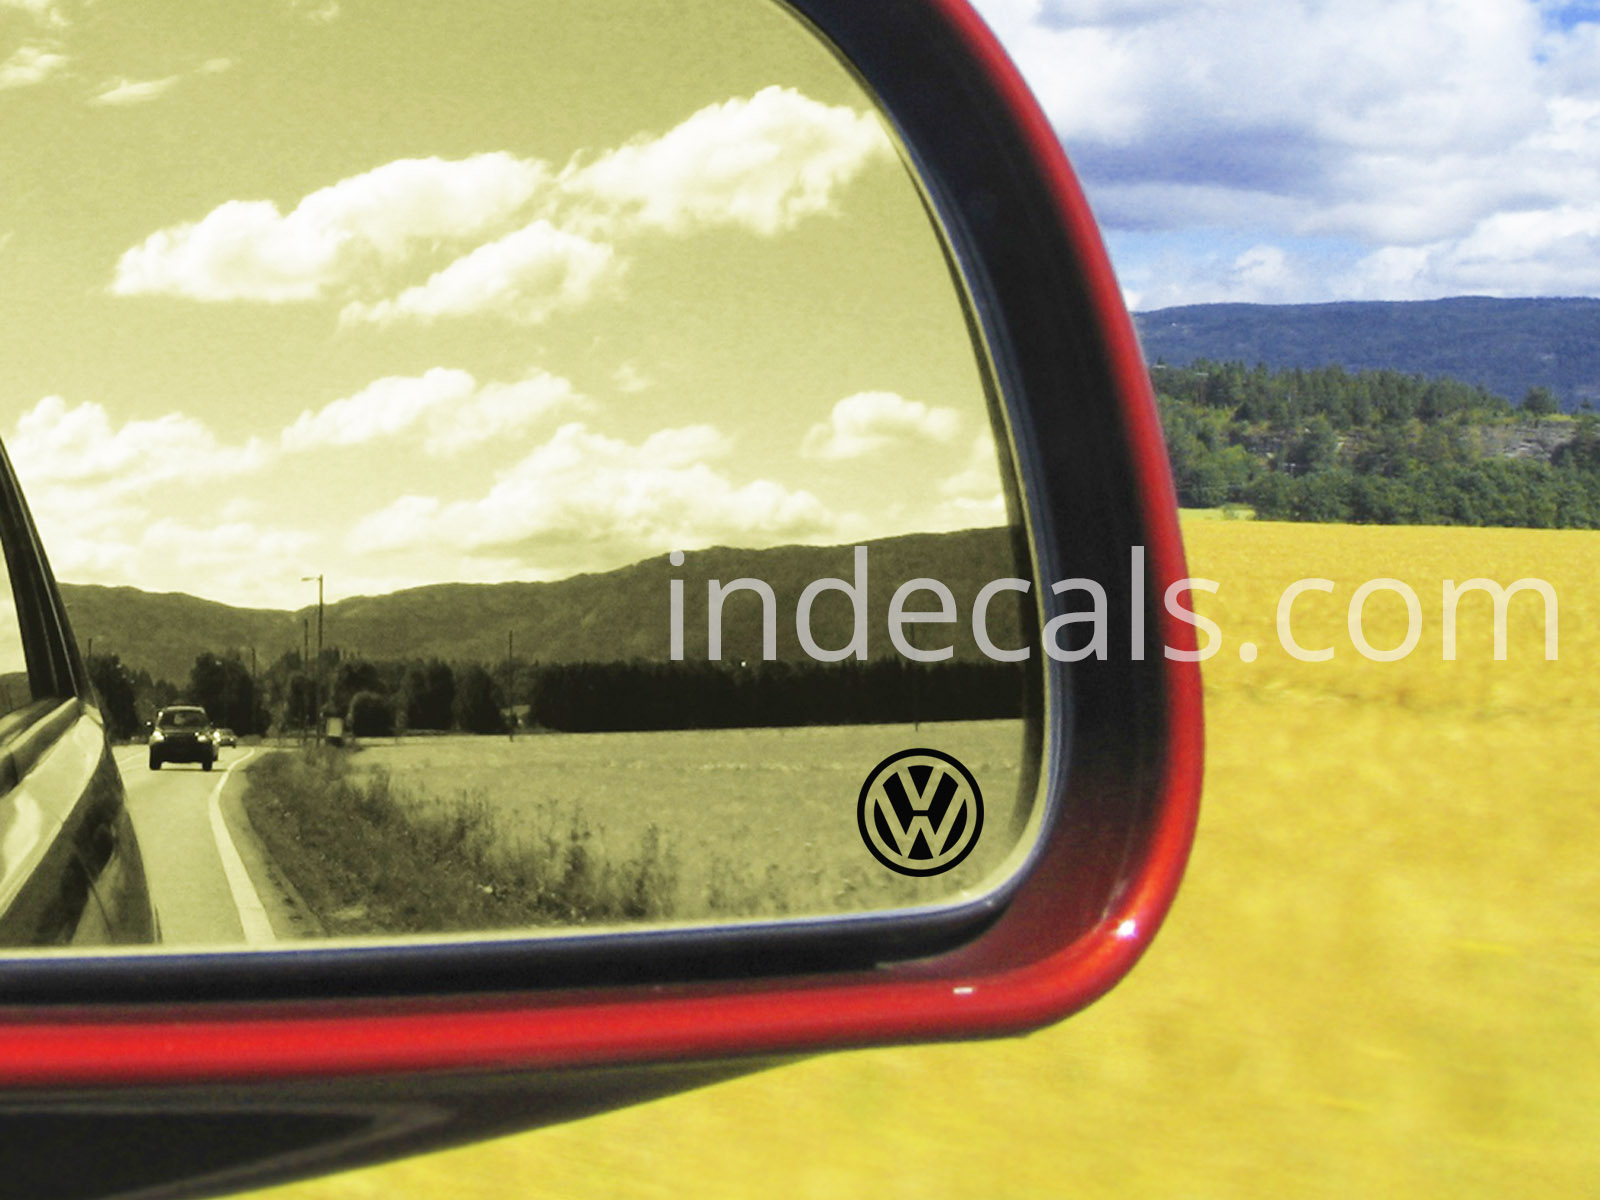 3 x Volkswagen Stickers for Mirror Glass - Black